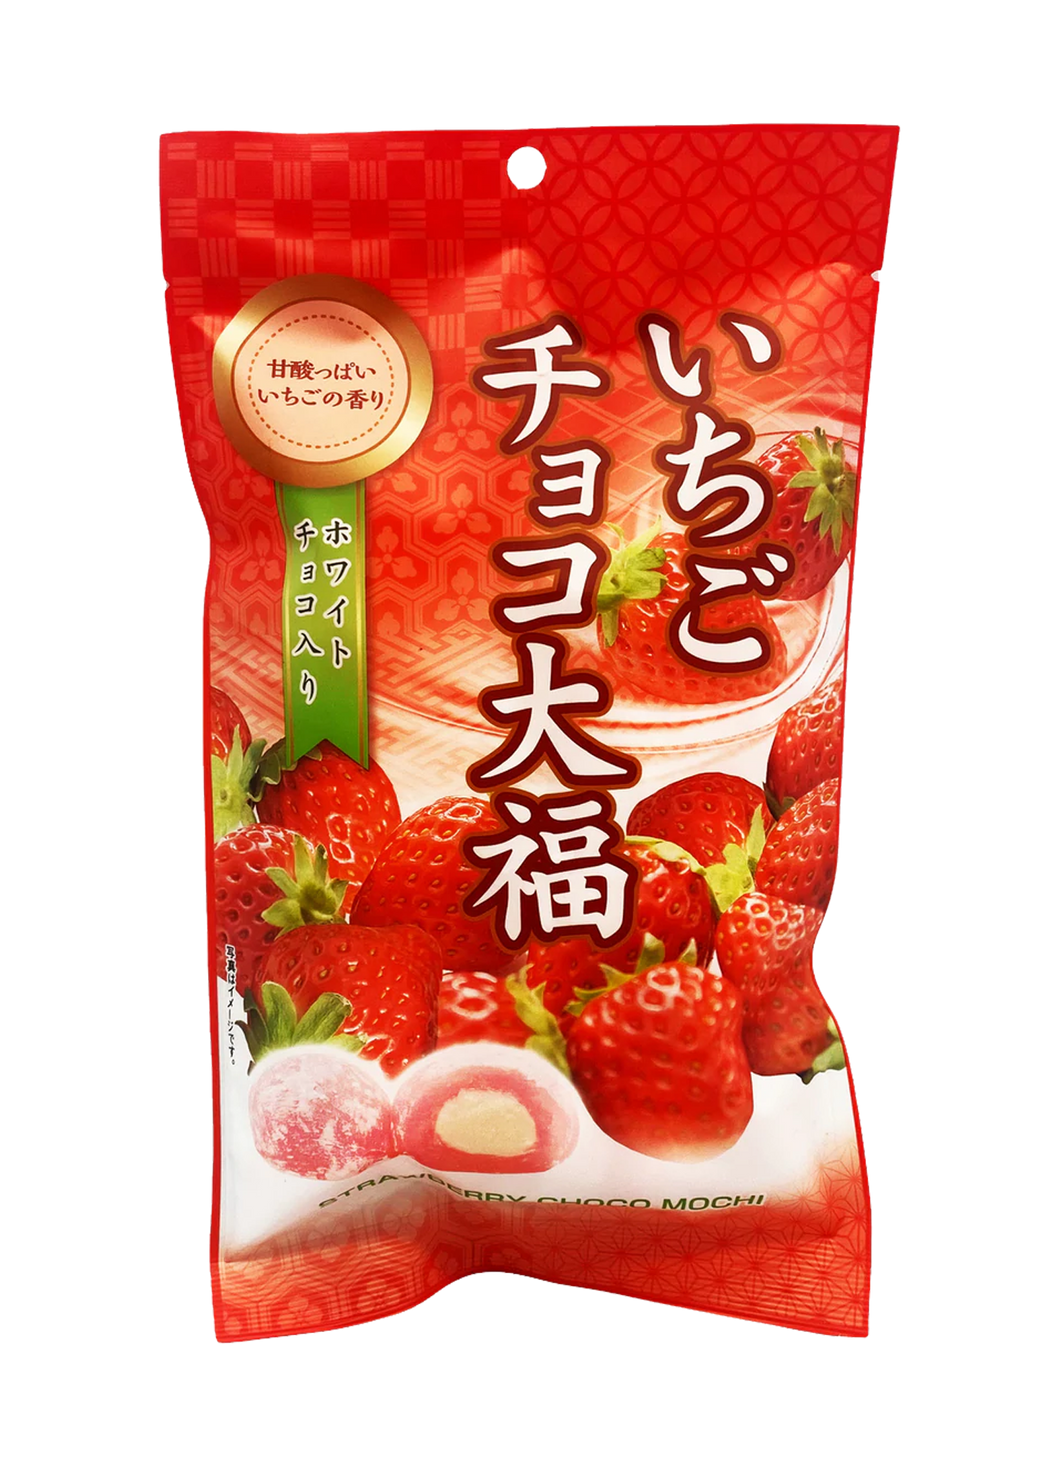 Seiki Strawberry Choco Mochi 160g